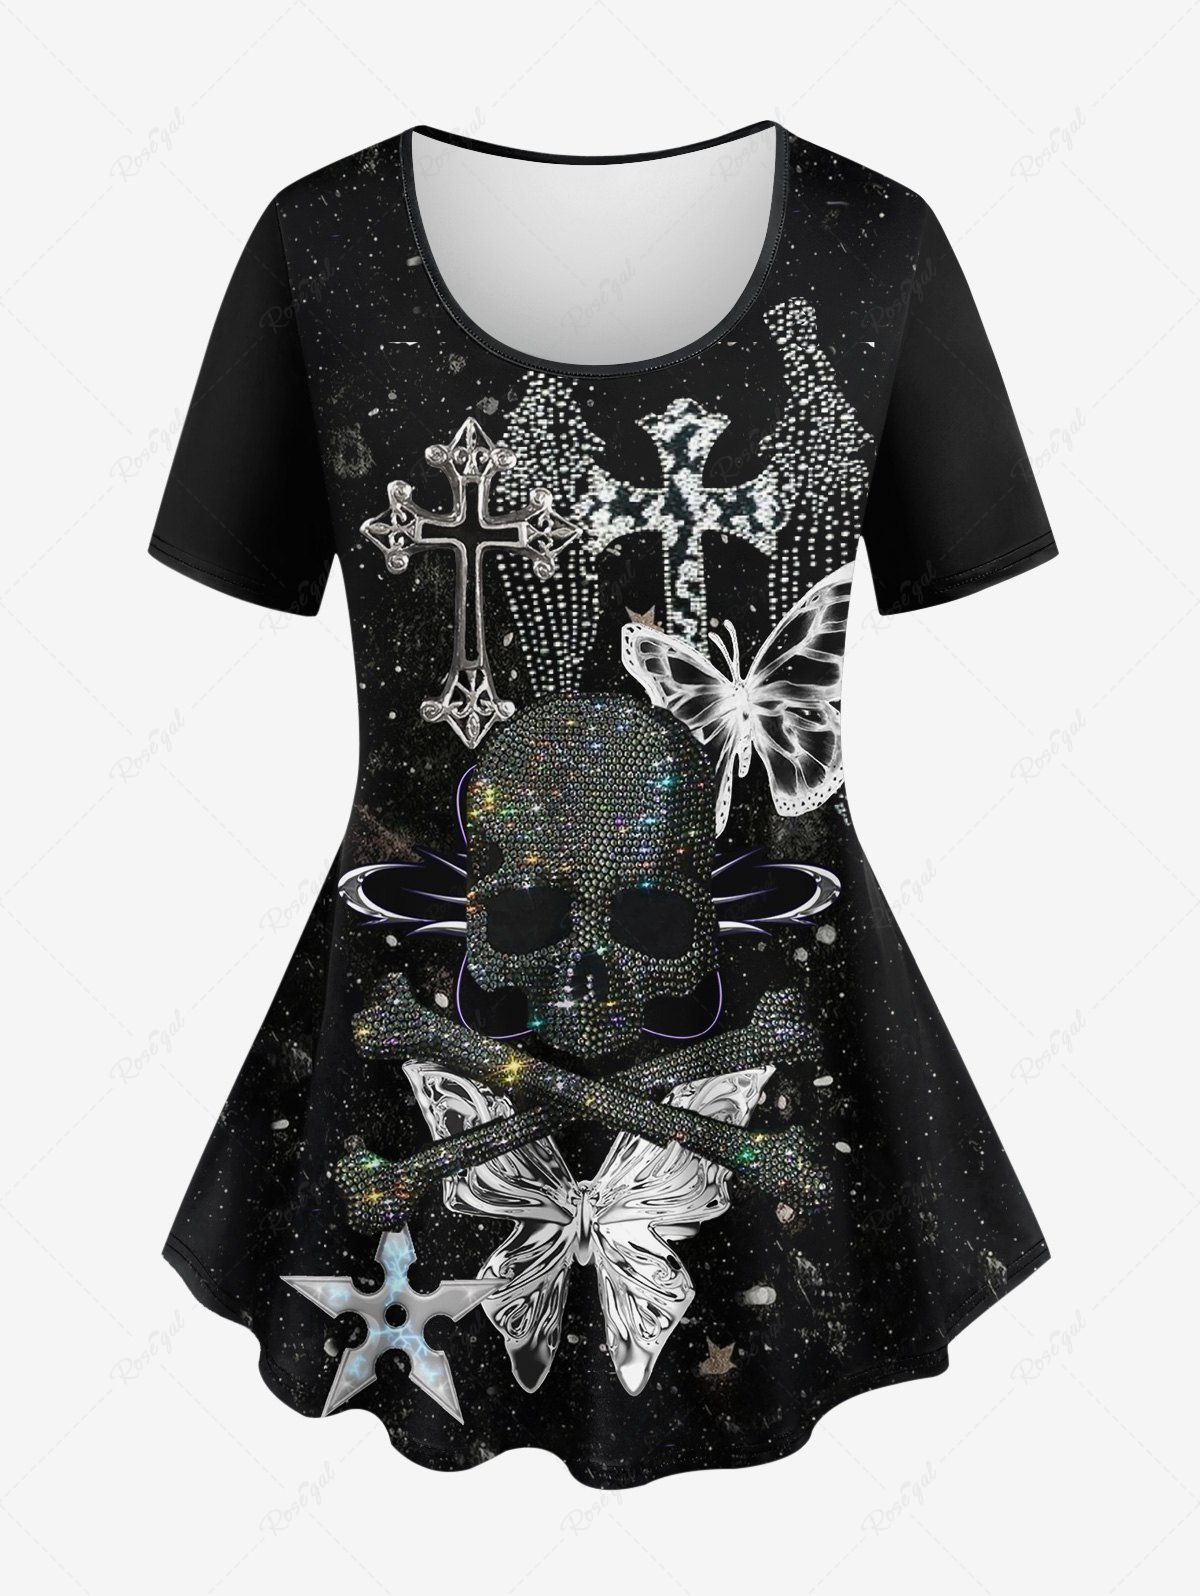 Sale Plus Size Skull Cross Butterfly Wings Star Sparkling Sequin Glitter 3D Print T-shirt  